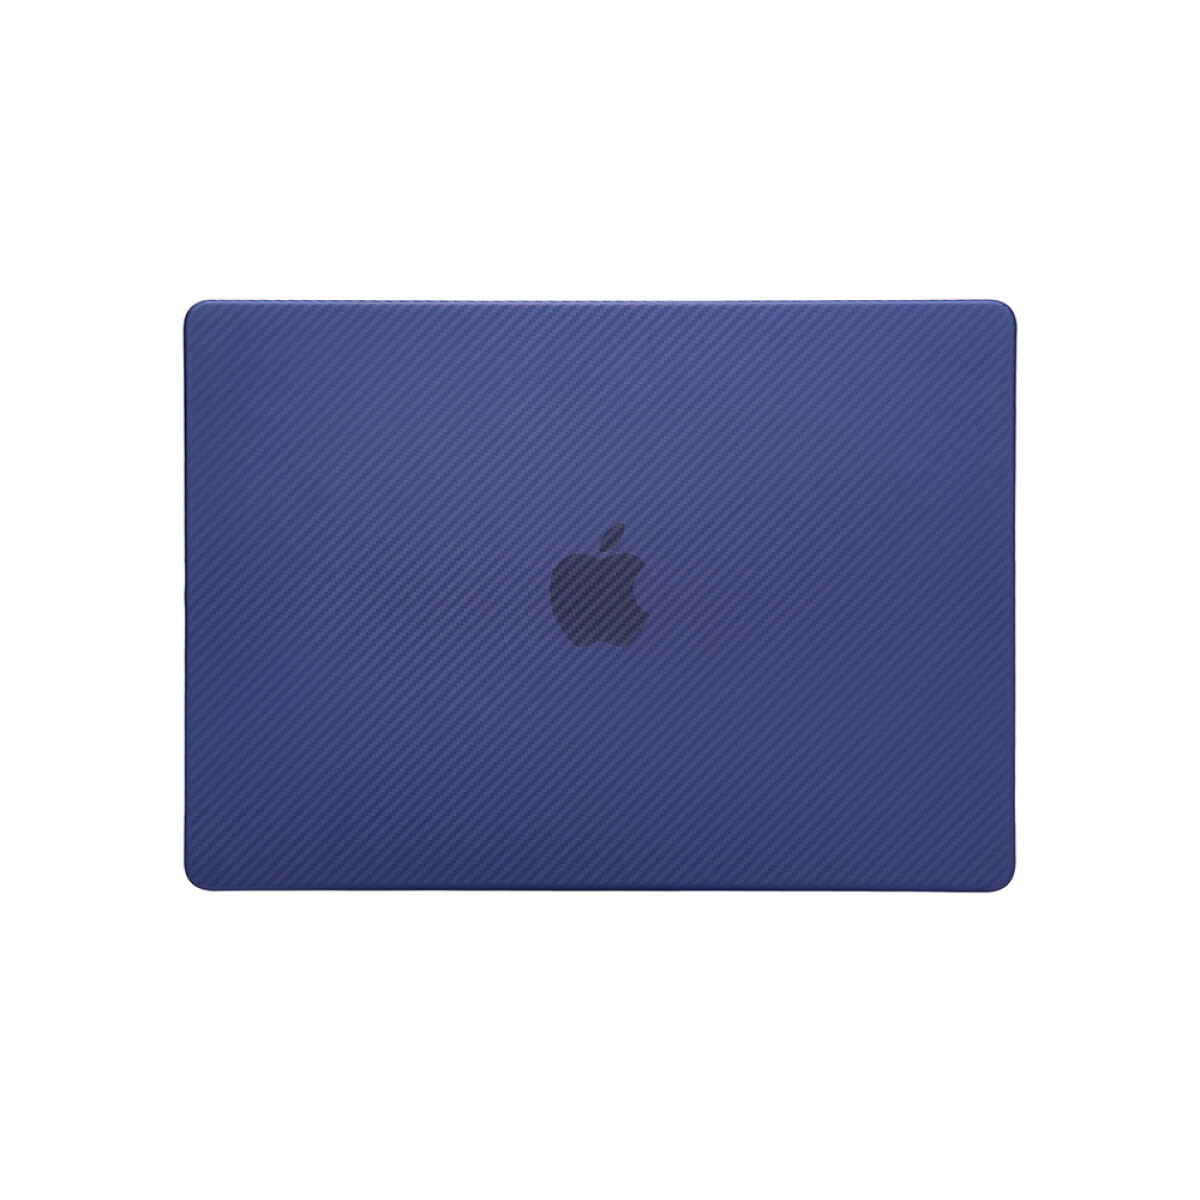 Carcasa protector hardsell fibra carbono para macbook air 13.3' devia - Peony blue 